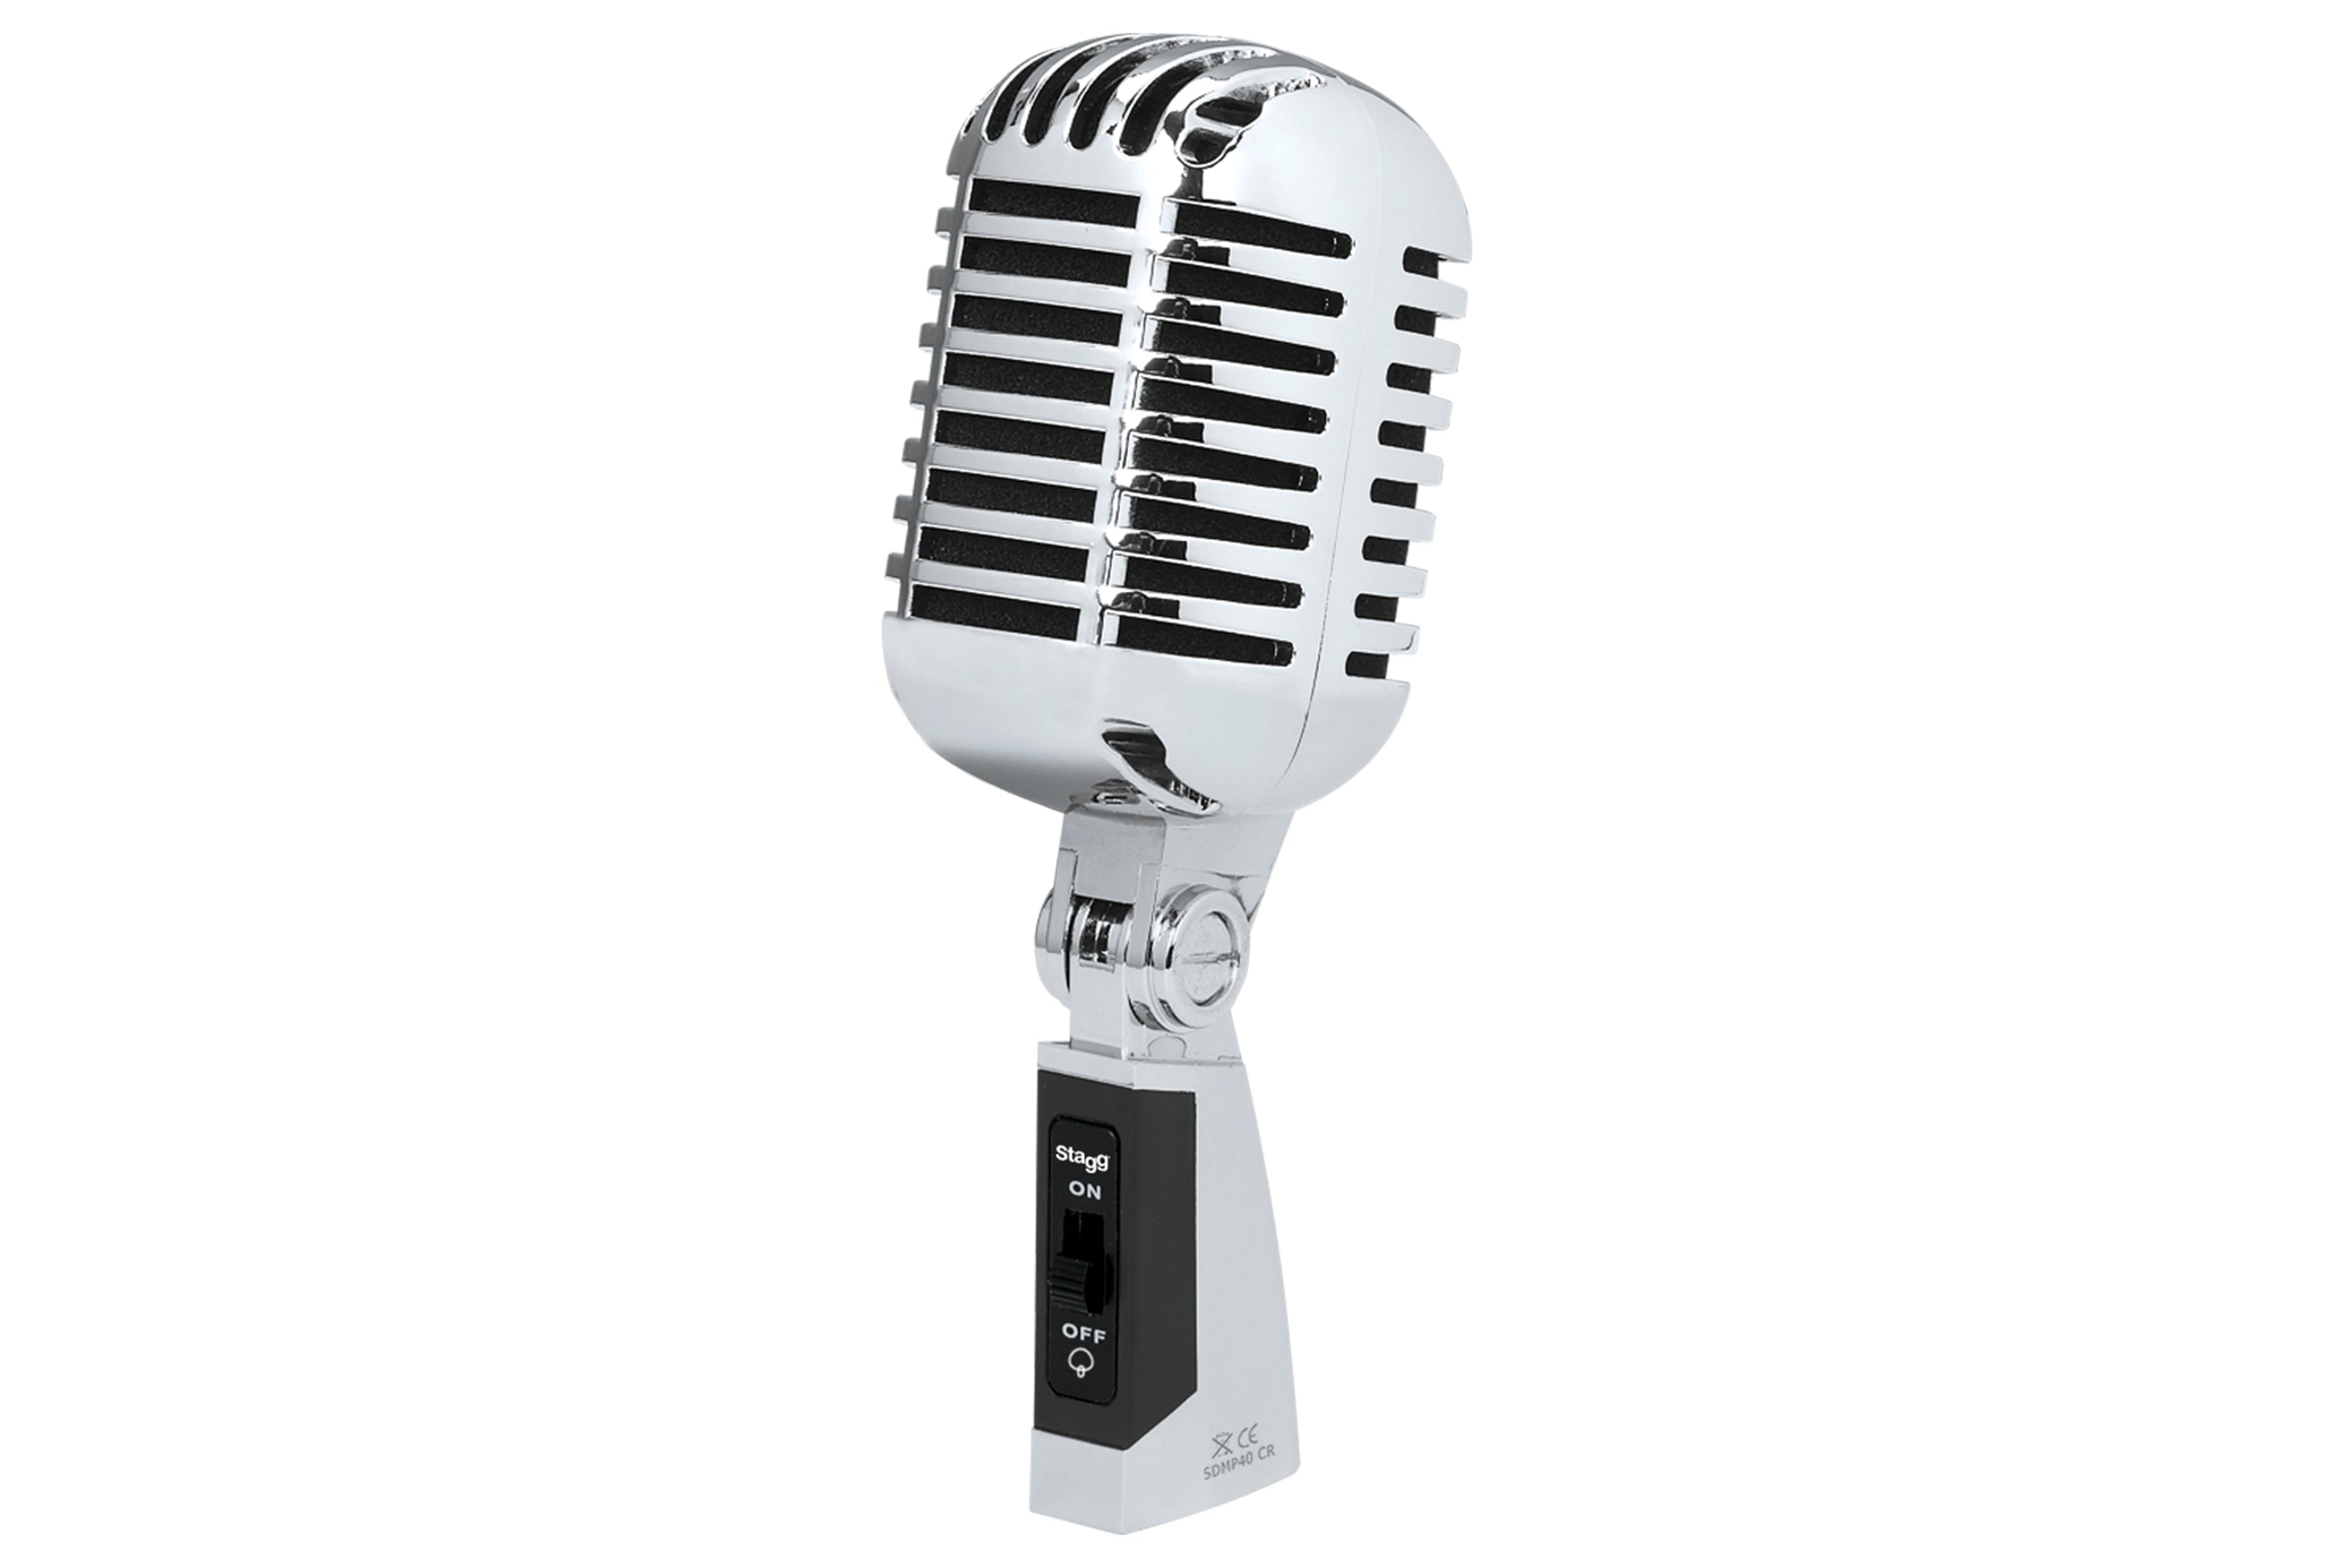 Stagg SDMP40 CR Cardioid Dynamic Microphone